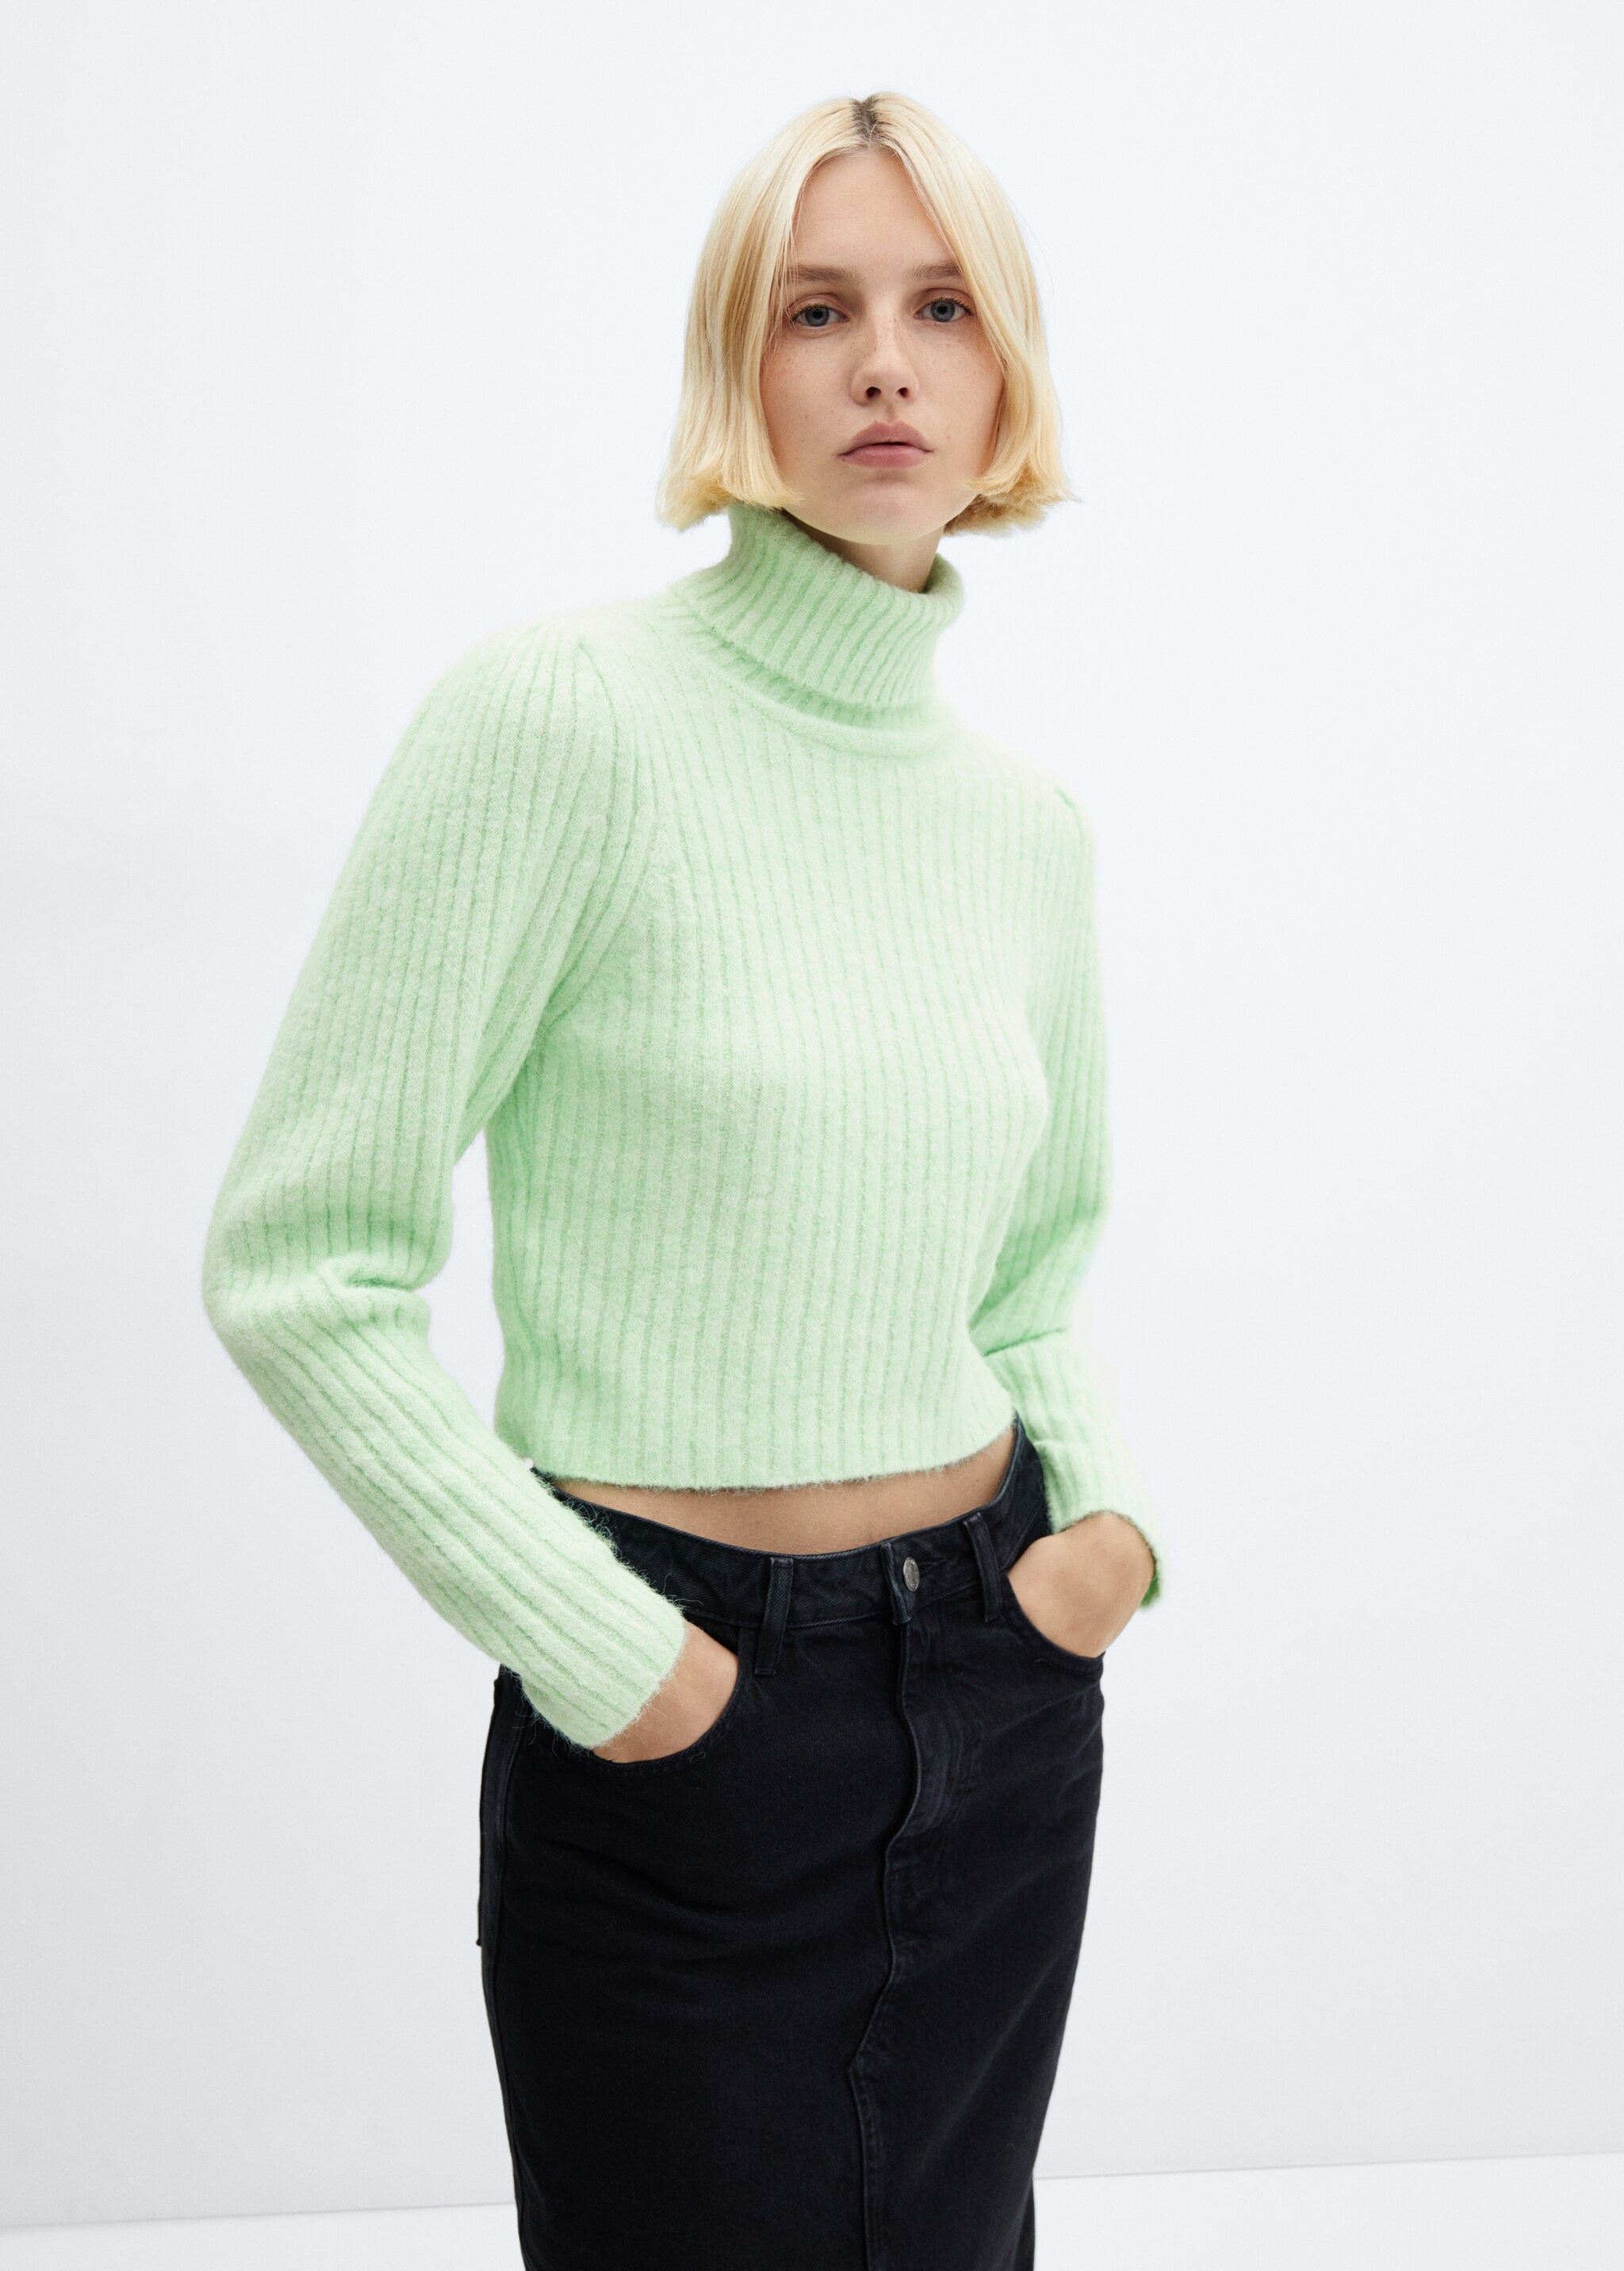 Turtleneck knitted sweater - Medium plane